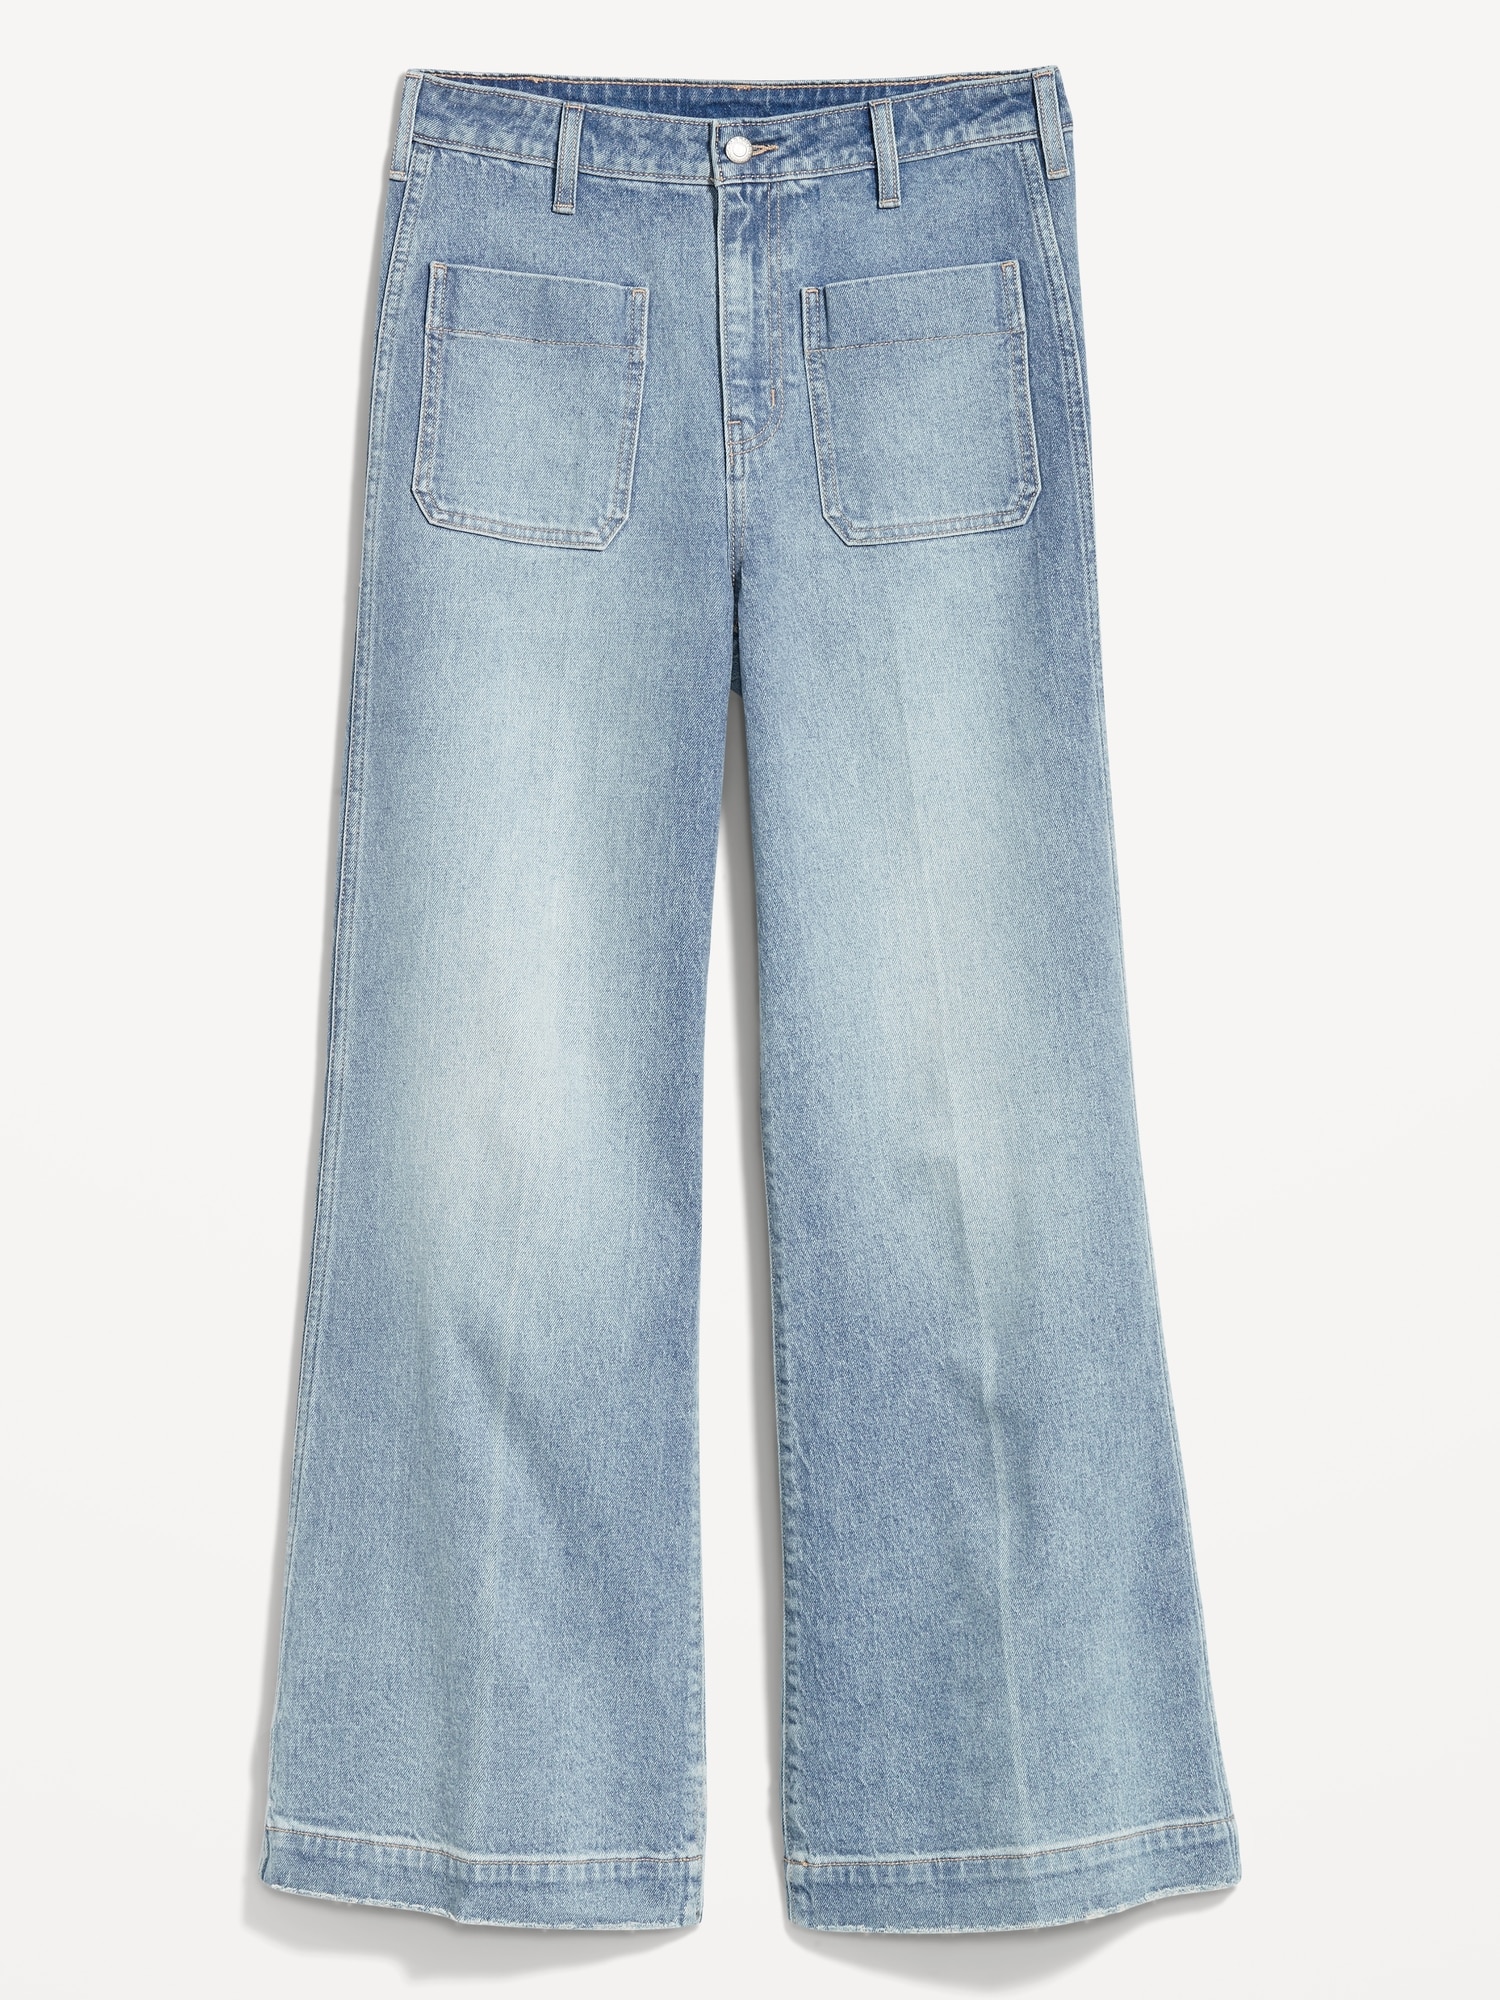 RPL Jeans New York Womens Denim Pants size 5 Waist-26” Blue High Rise  Skinny NEW